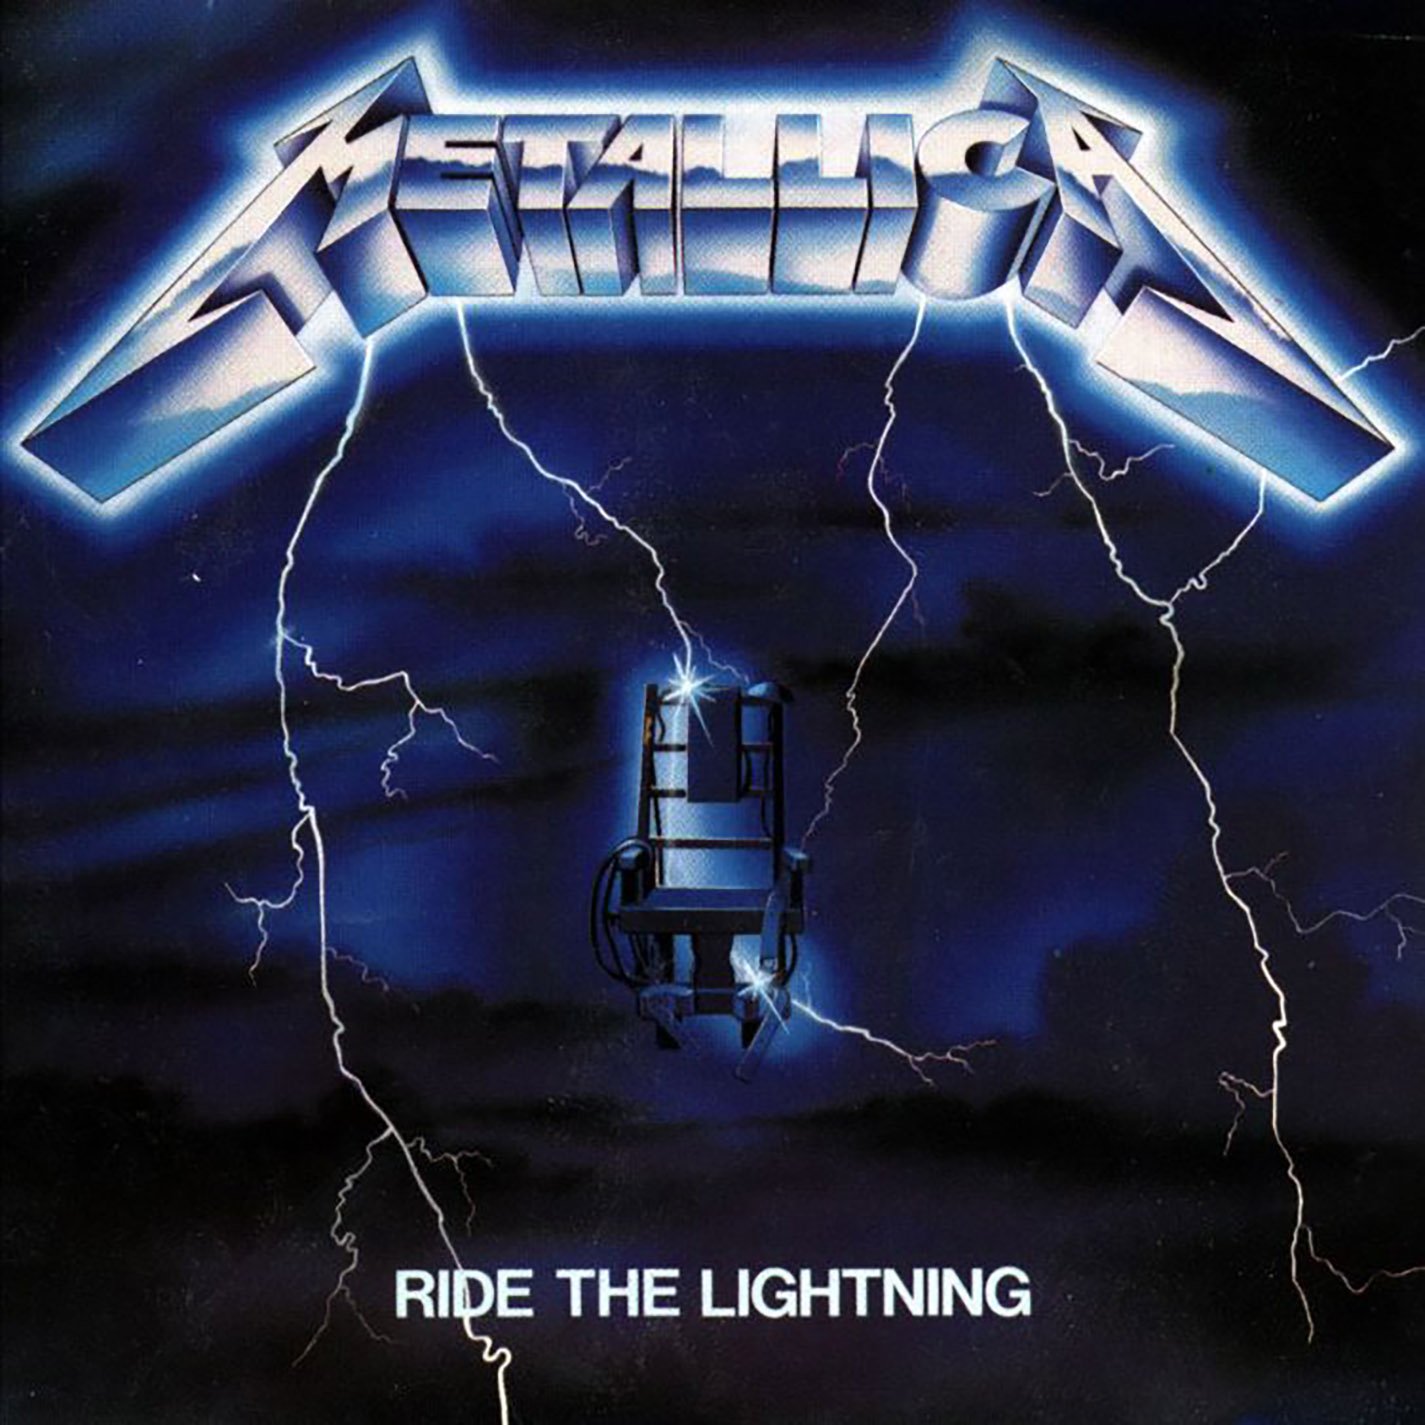 Metallica - Ride The Lightning CD - $5 @ Amazon.com